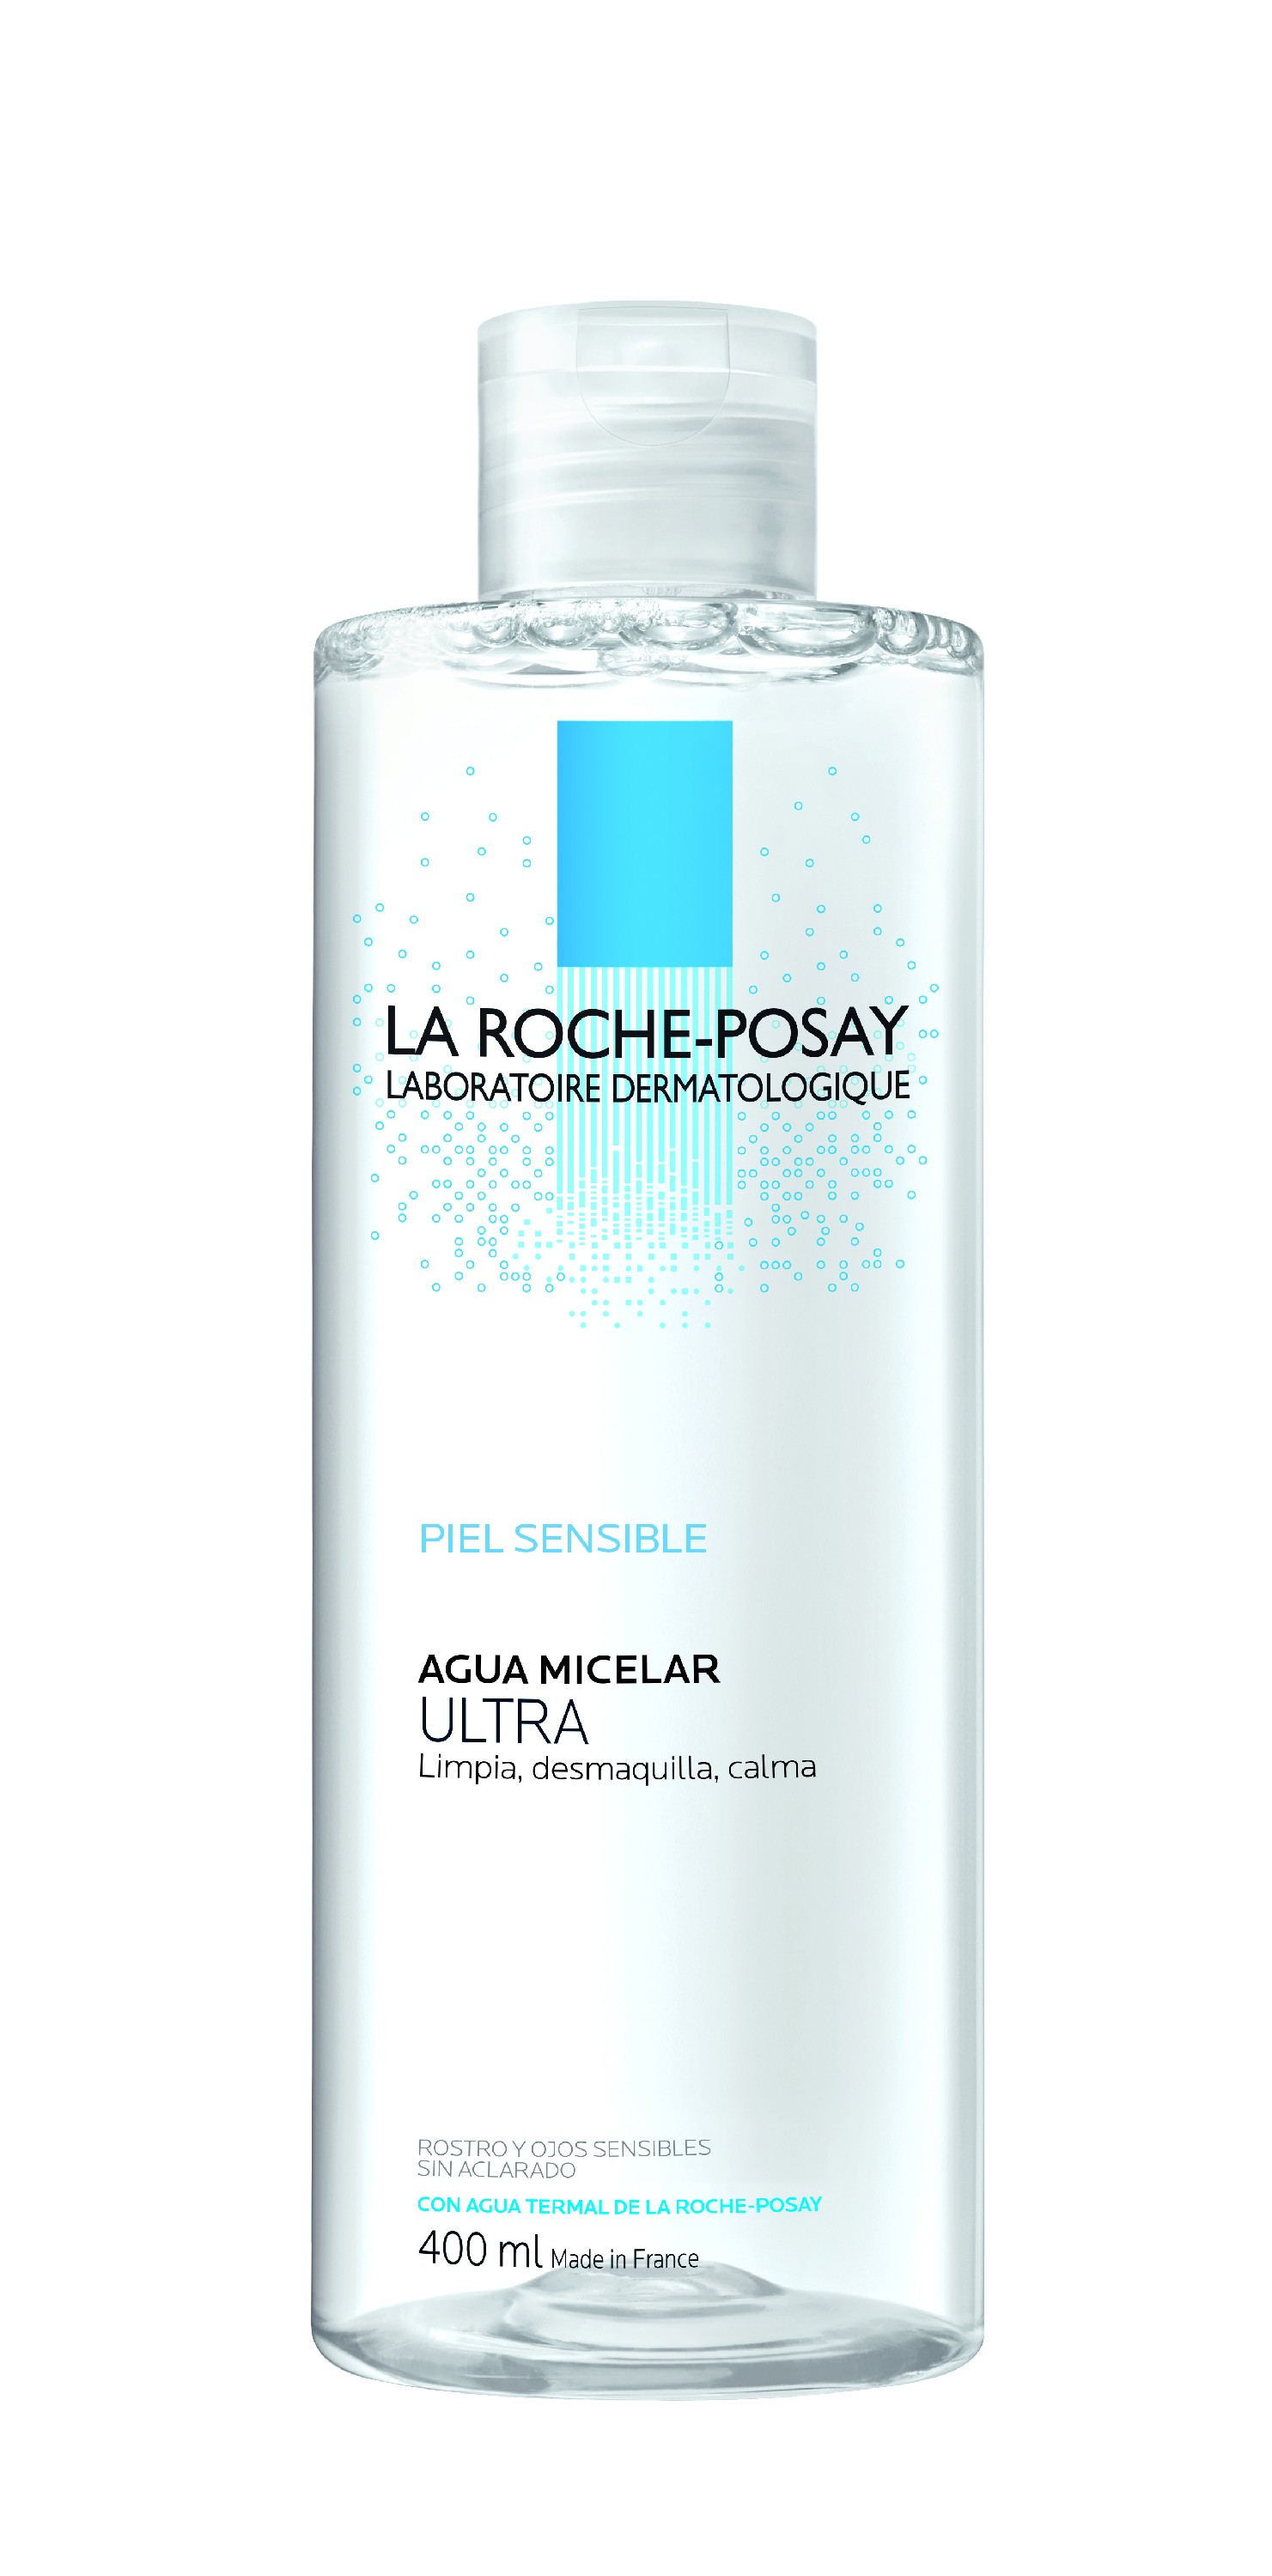 La Roche-Posay Solução Micelar, 400ml